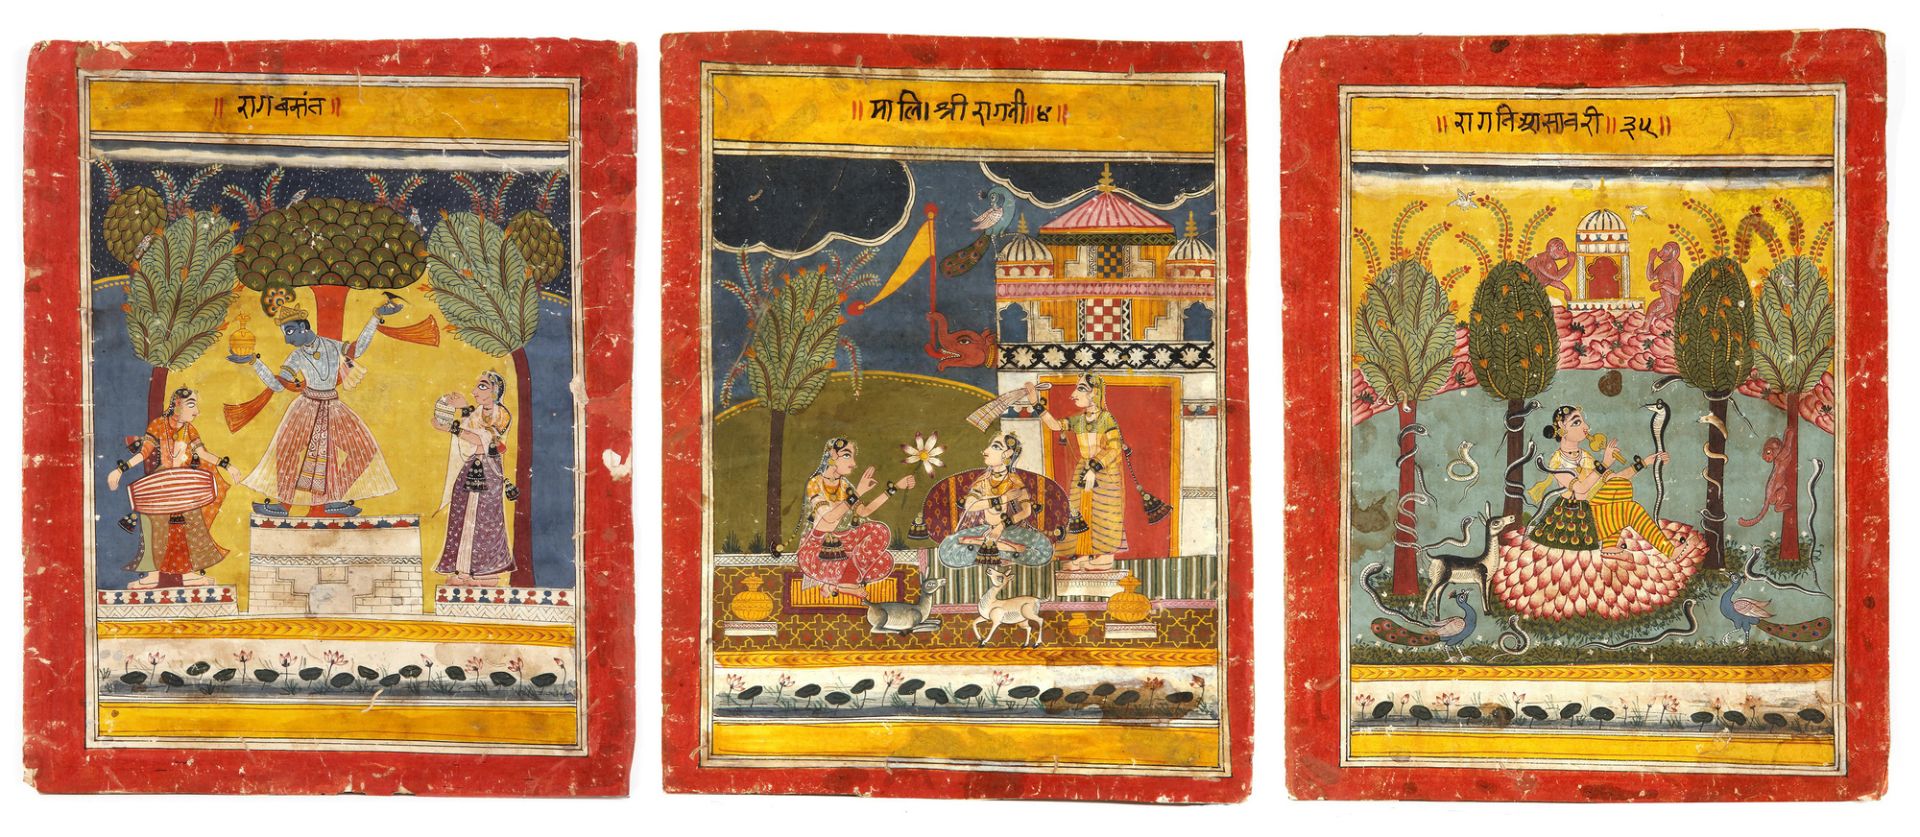 AN ILLUSTRATION FROM THE RAGAMALA SERIES, SHRI RAGA, CENTRAL INDIA, MALWA 17TH CENTURY - Image 2 of 6